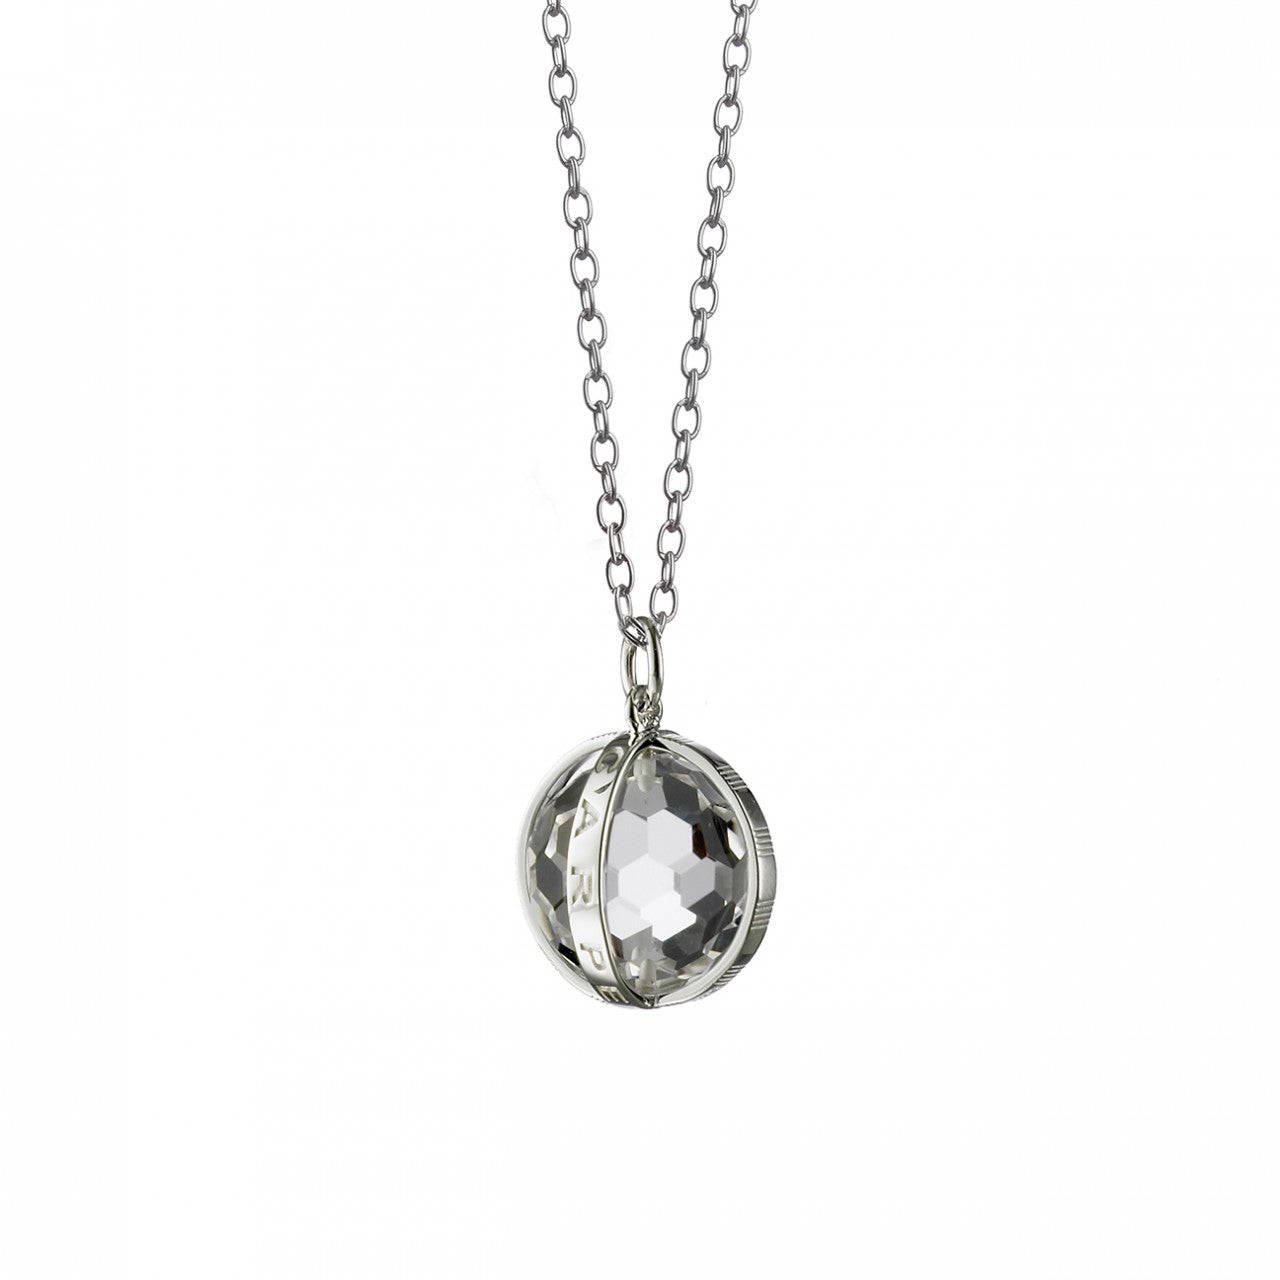 Carpe Diem Necklace in Silver, Small